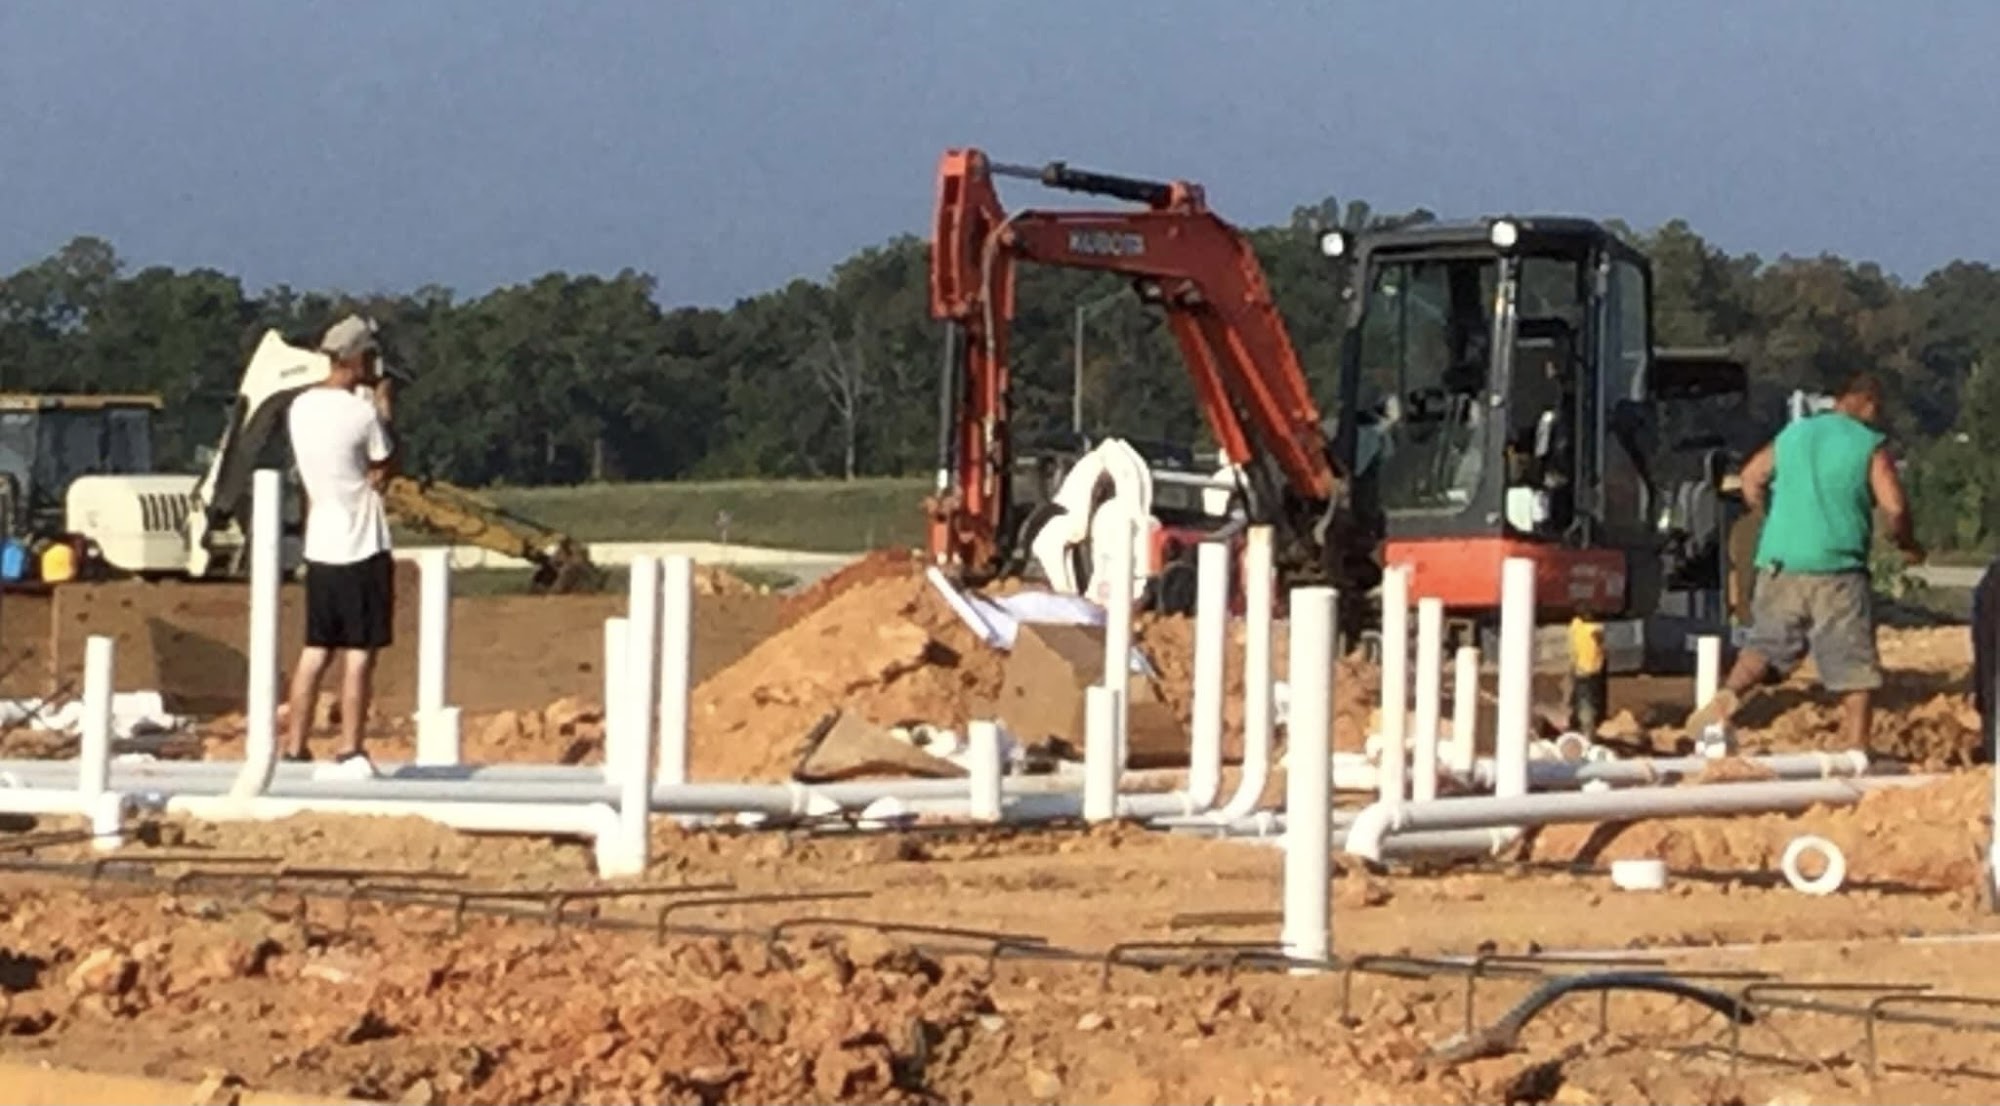 RjRogers Plumbing & Contracting 950 US-90, Waveland Mississippi 39576